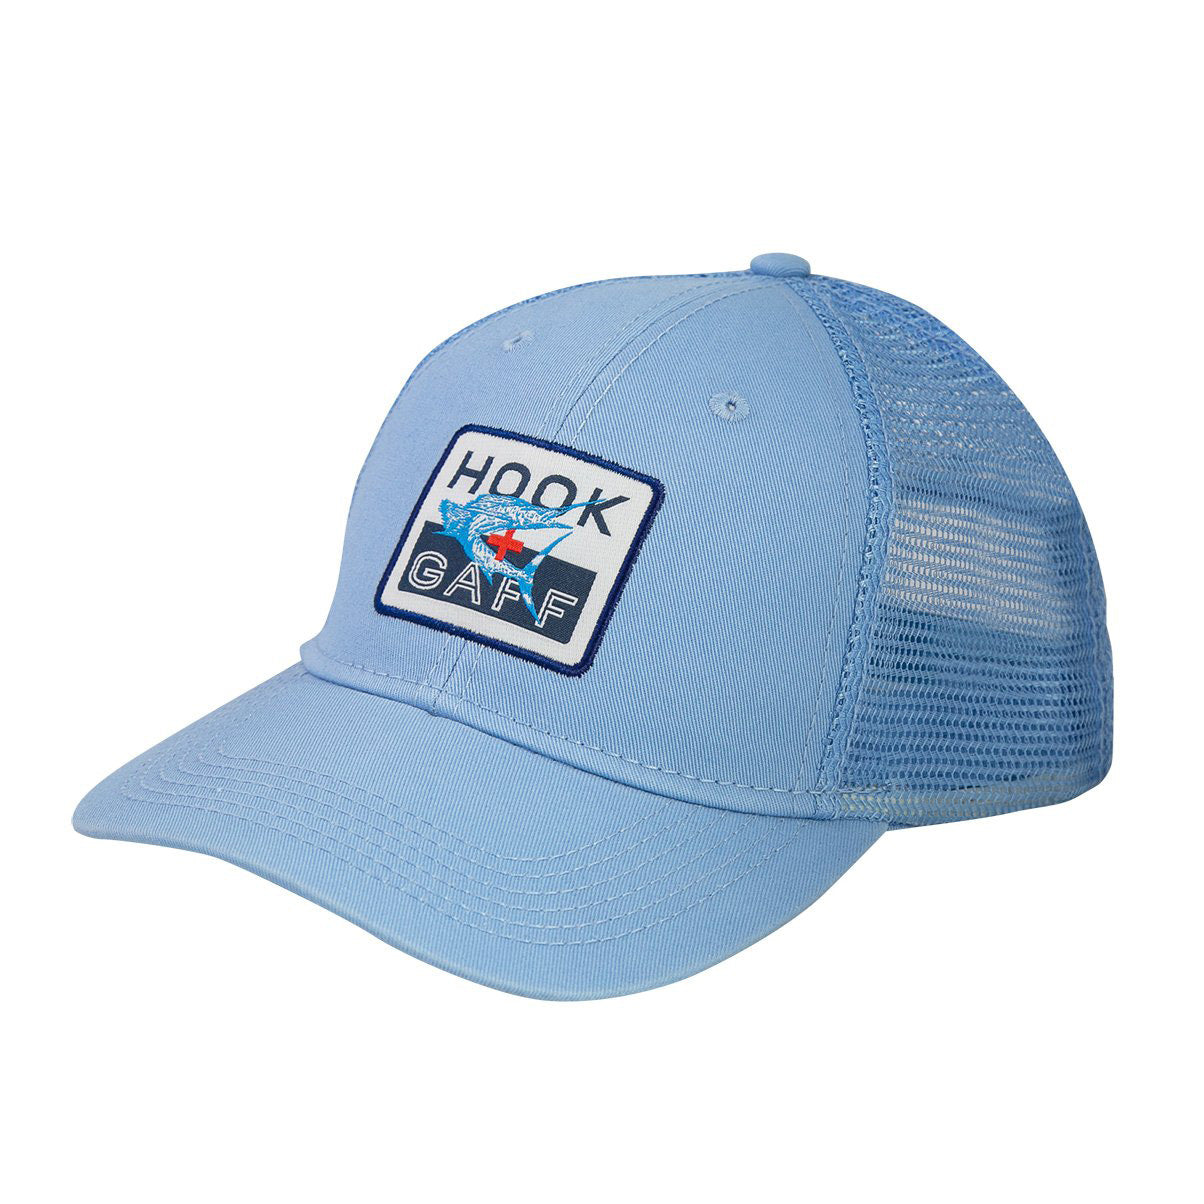 Sailfish Patch Hat Light Blue